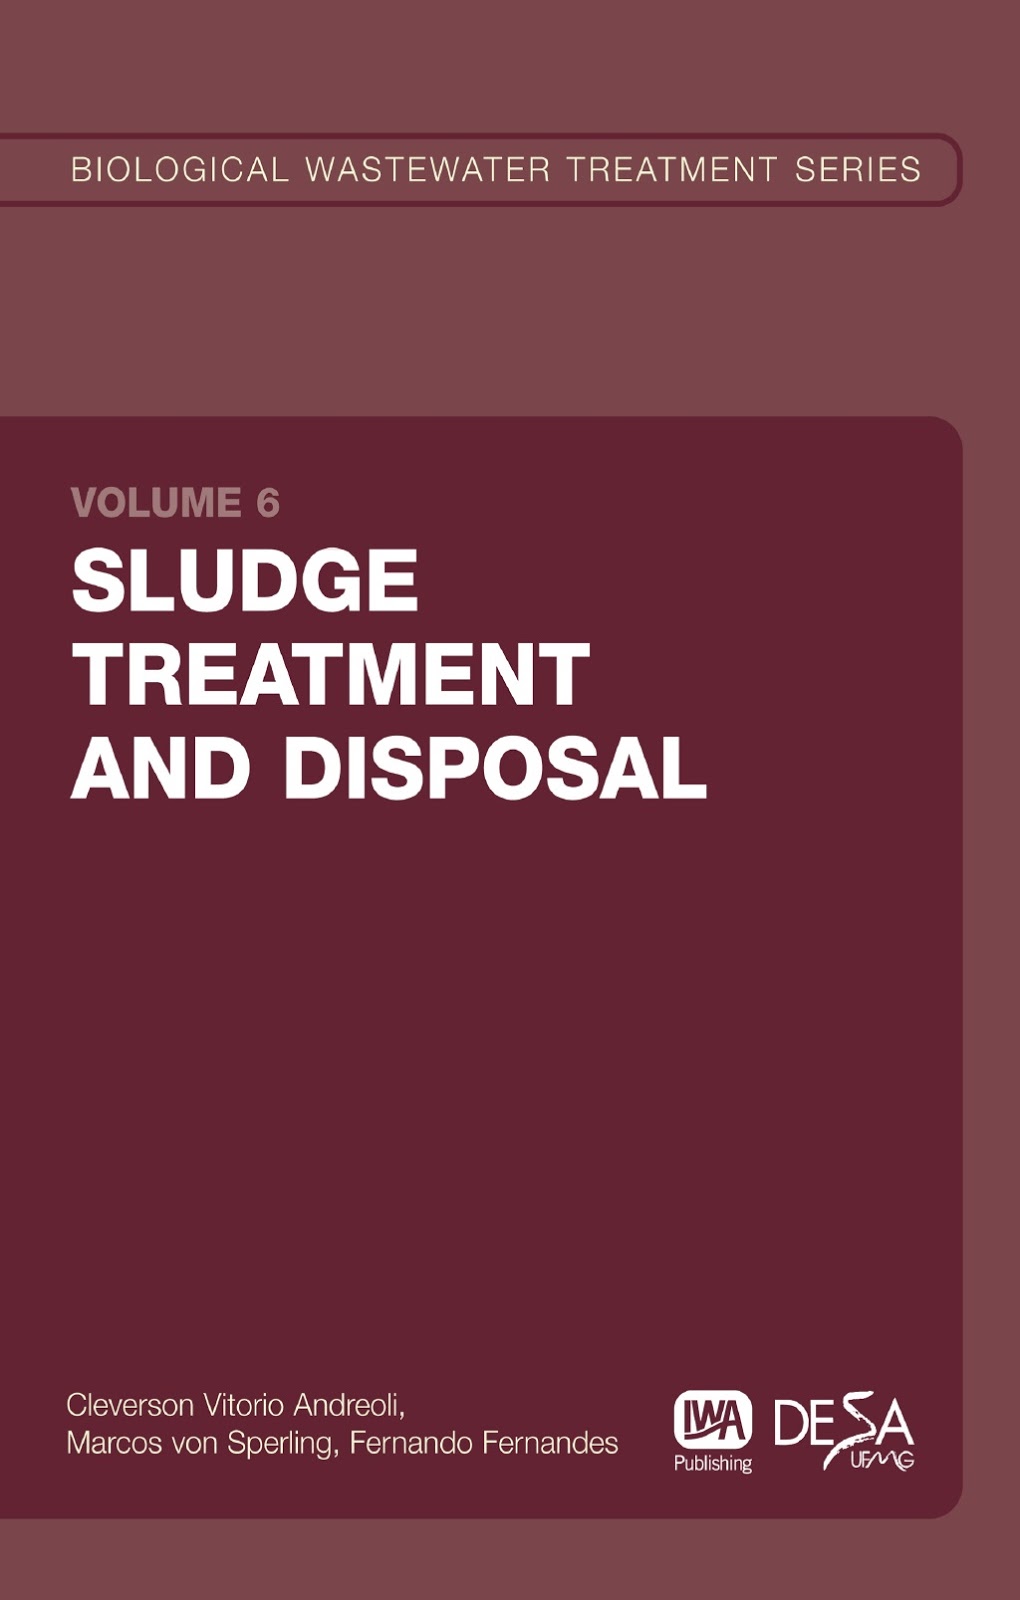 literature review on sewage sludge